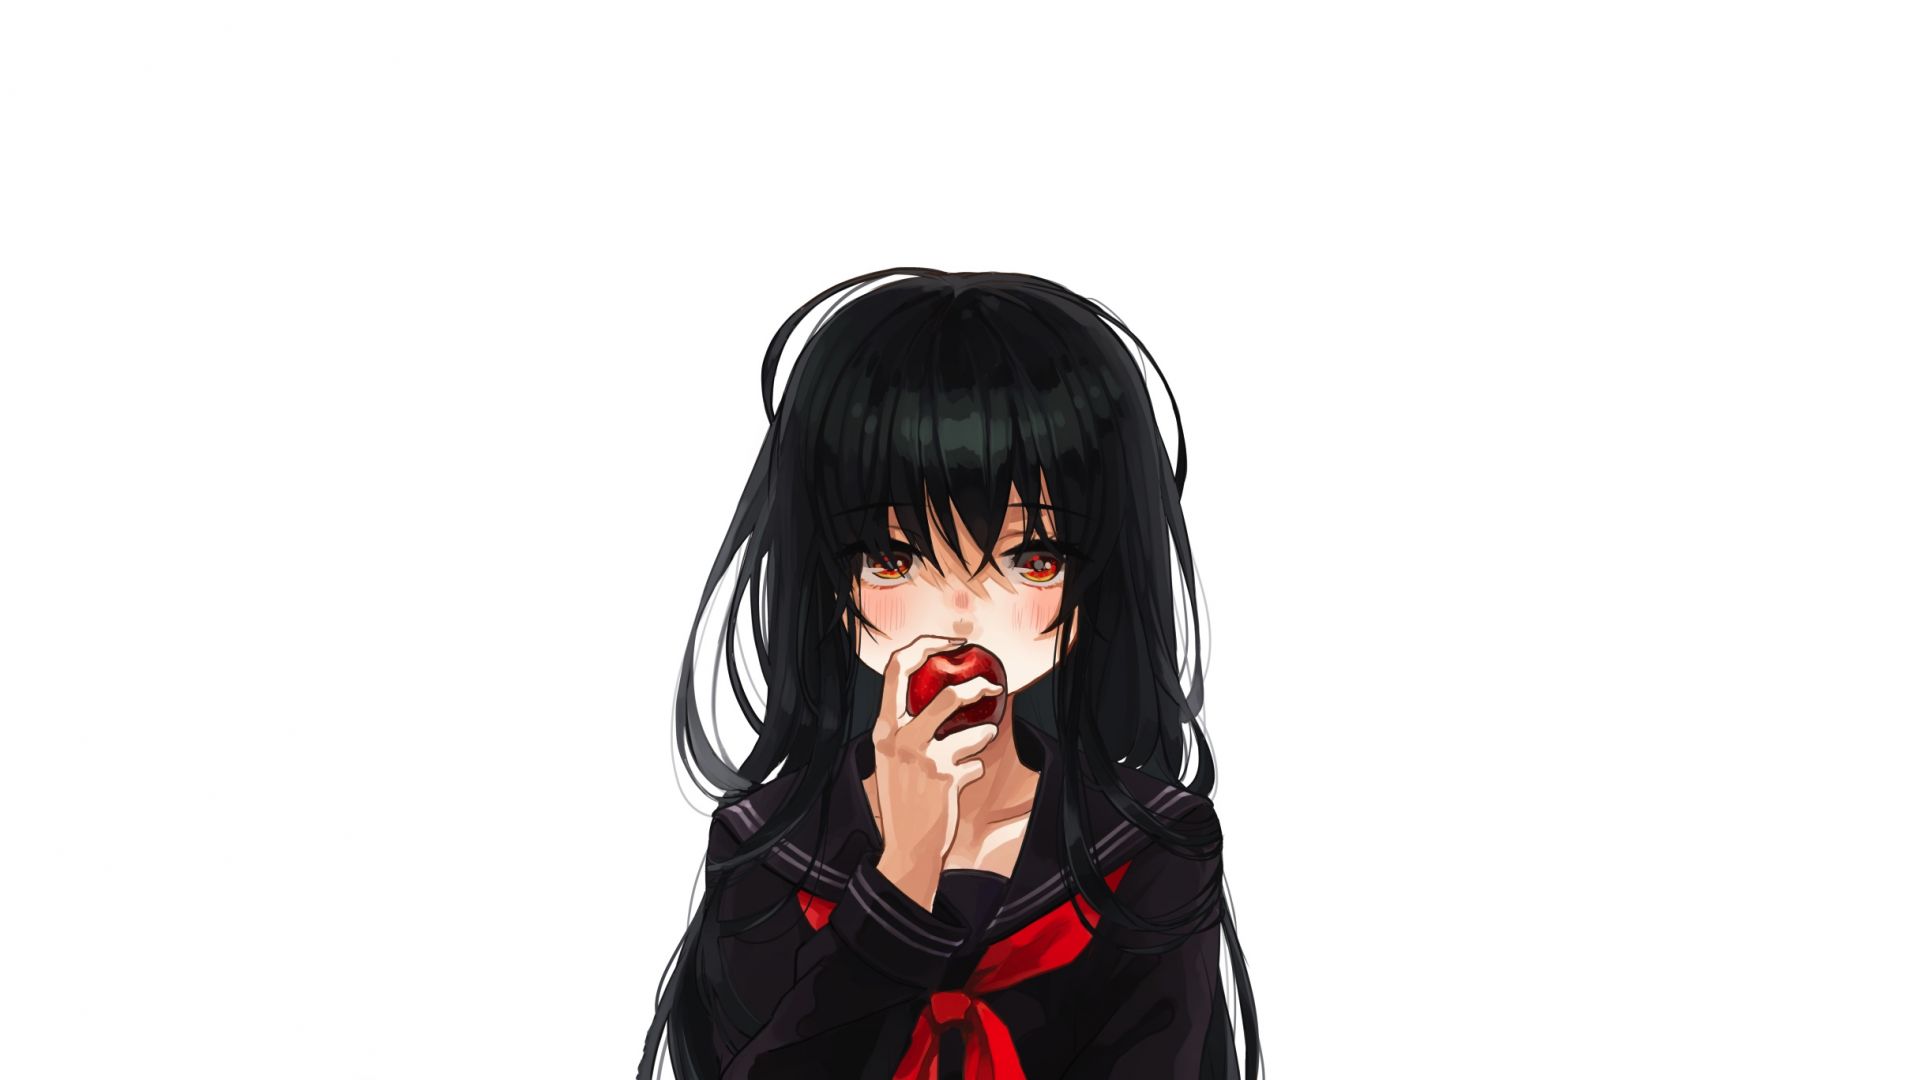 Cute Anime Girl in Black Dress Wallpapers - Anime Girl Wallpapers